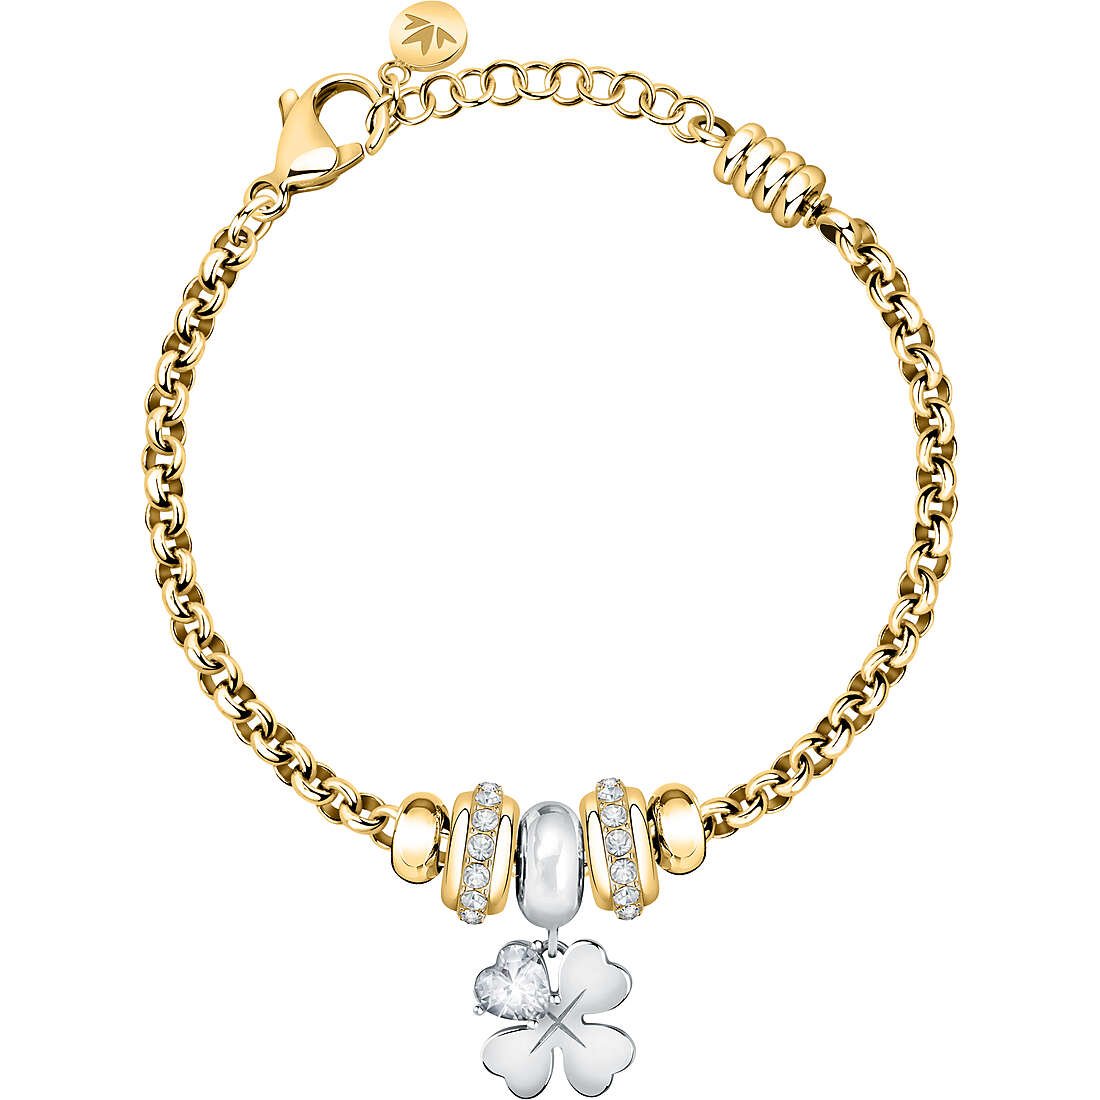 bracelet woman jewellery Morellato Drops SCZ1254